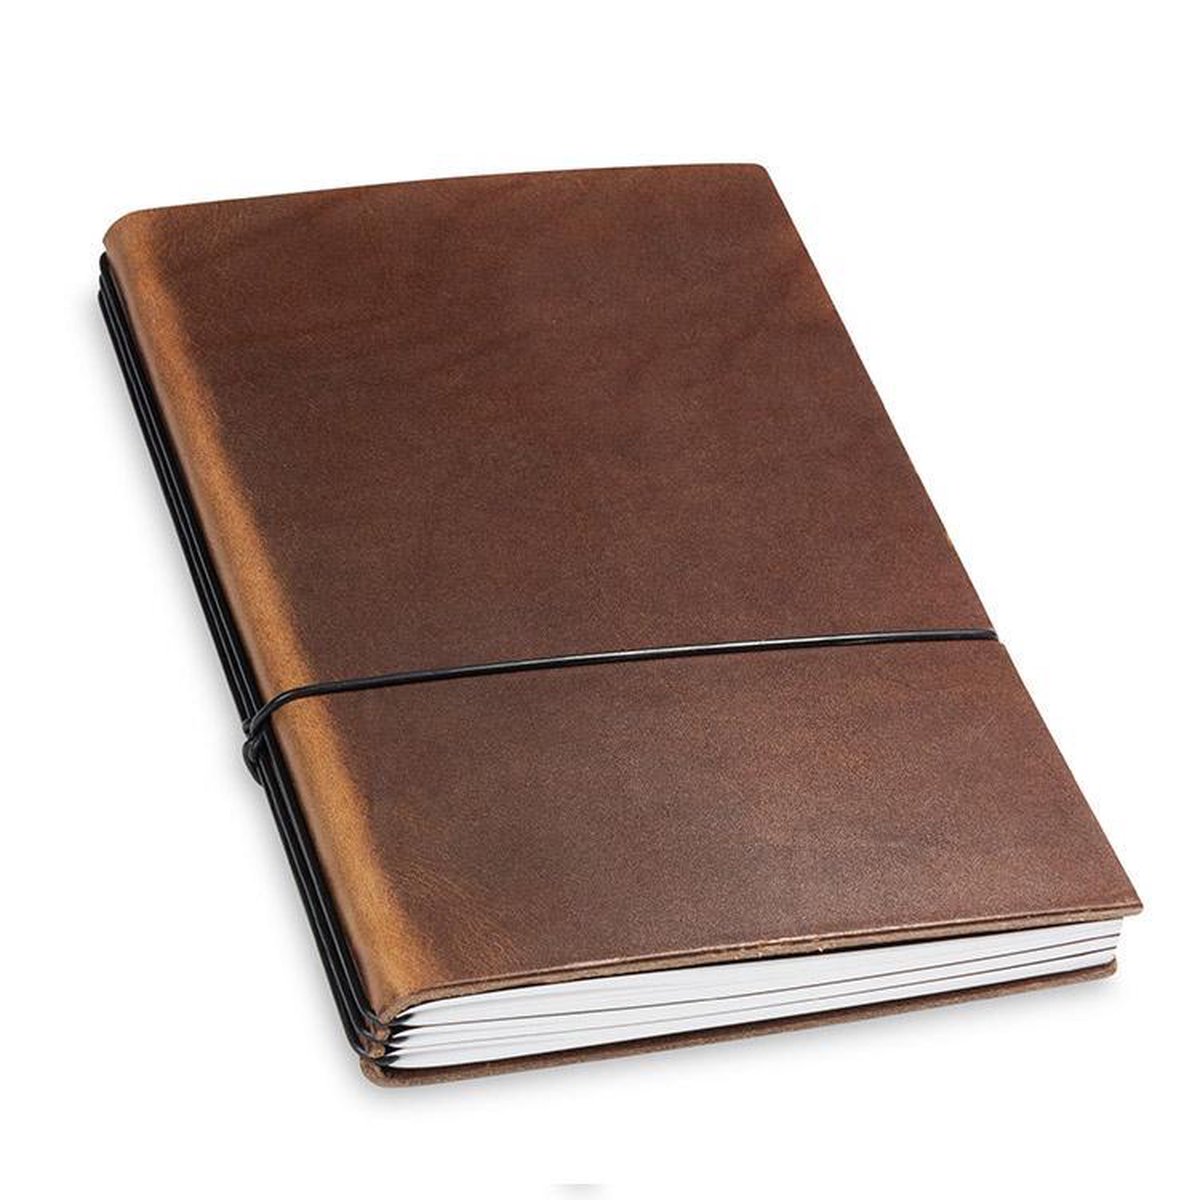 X17 Notebook A5 Leder Natur Marrone - 3 katernen